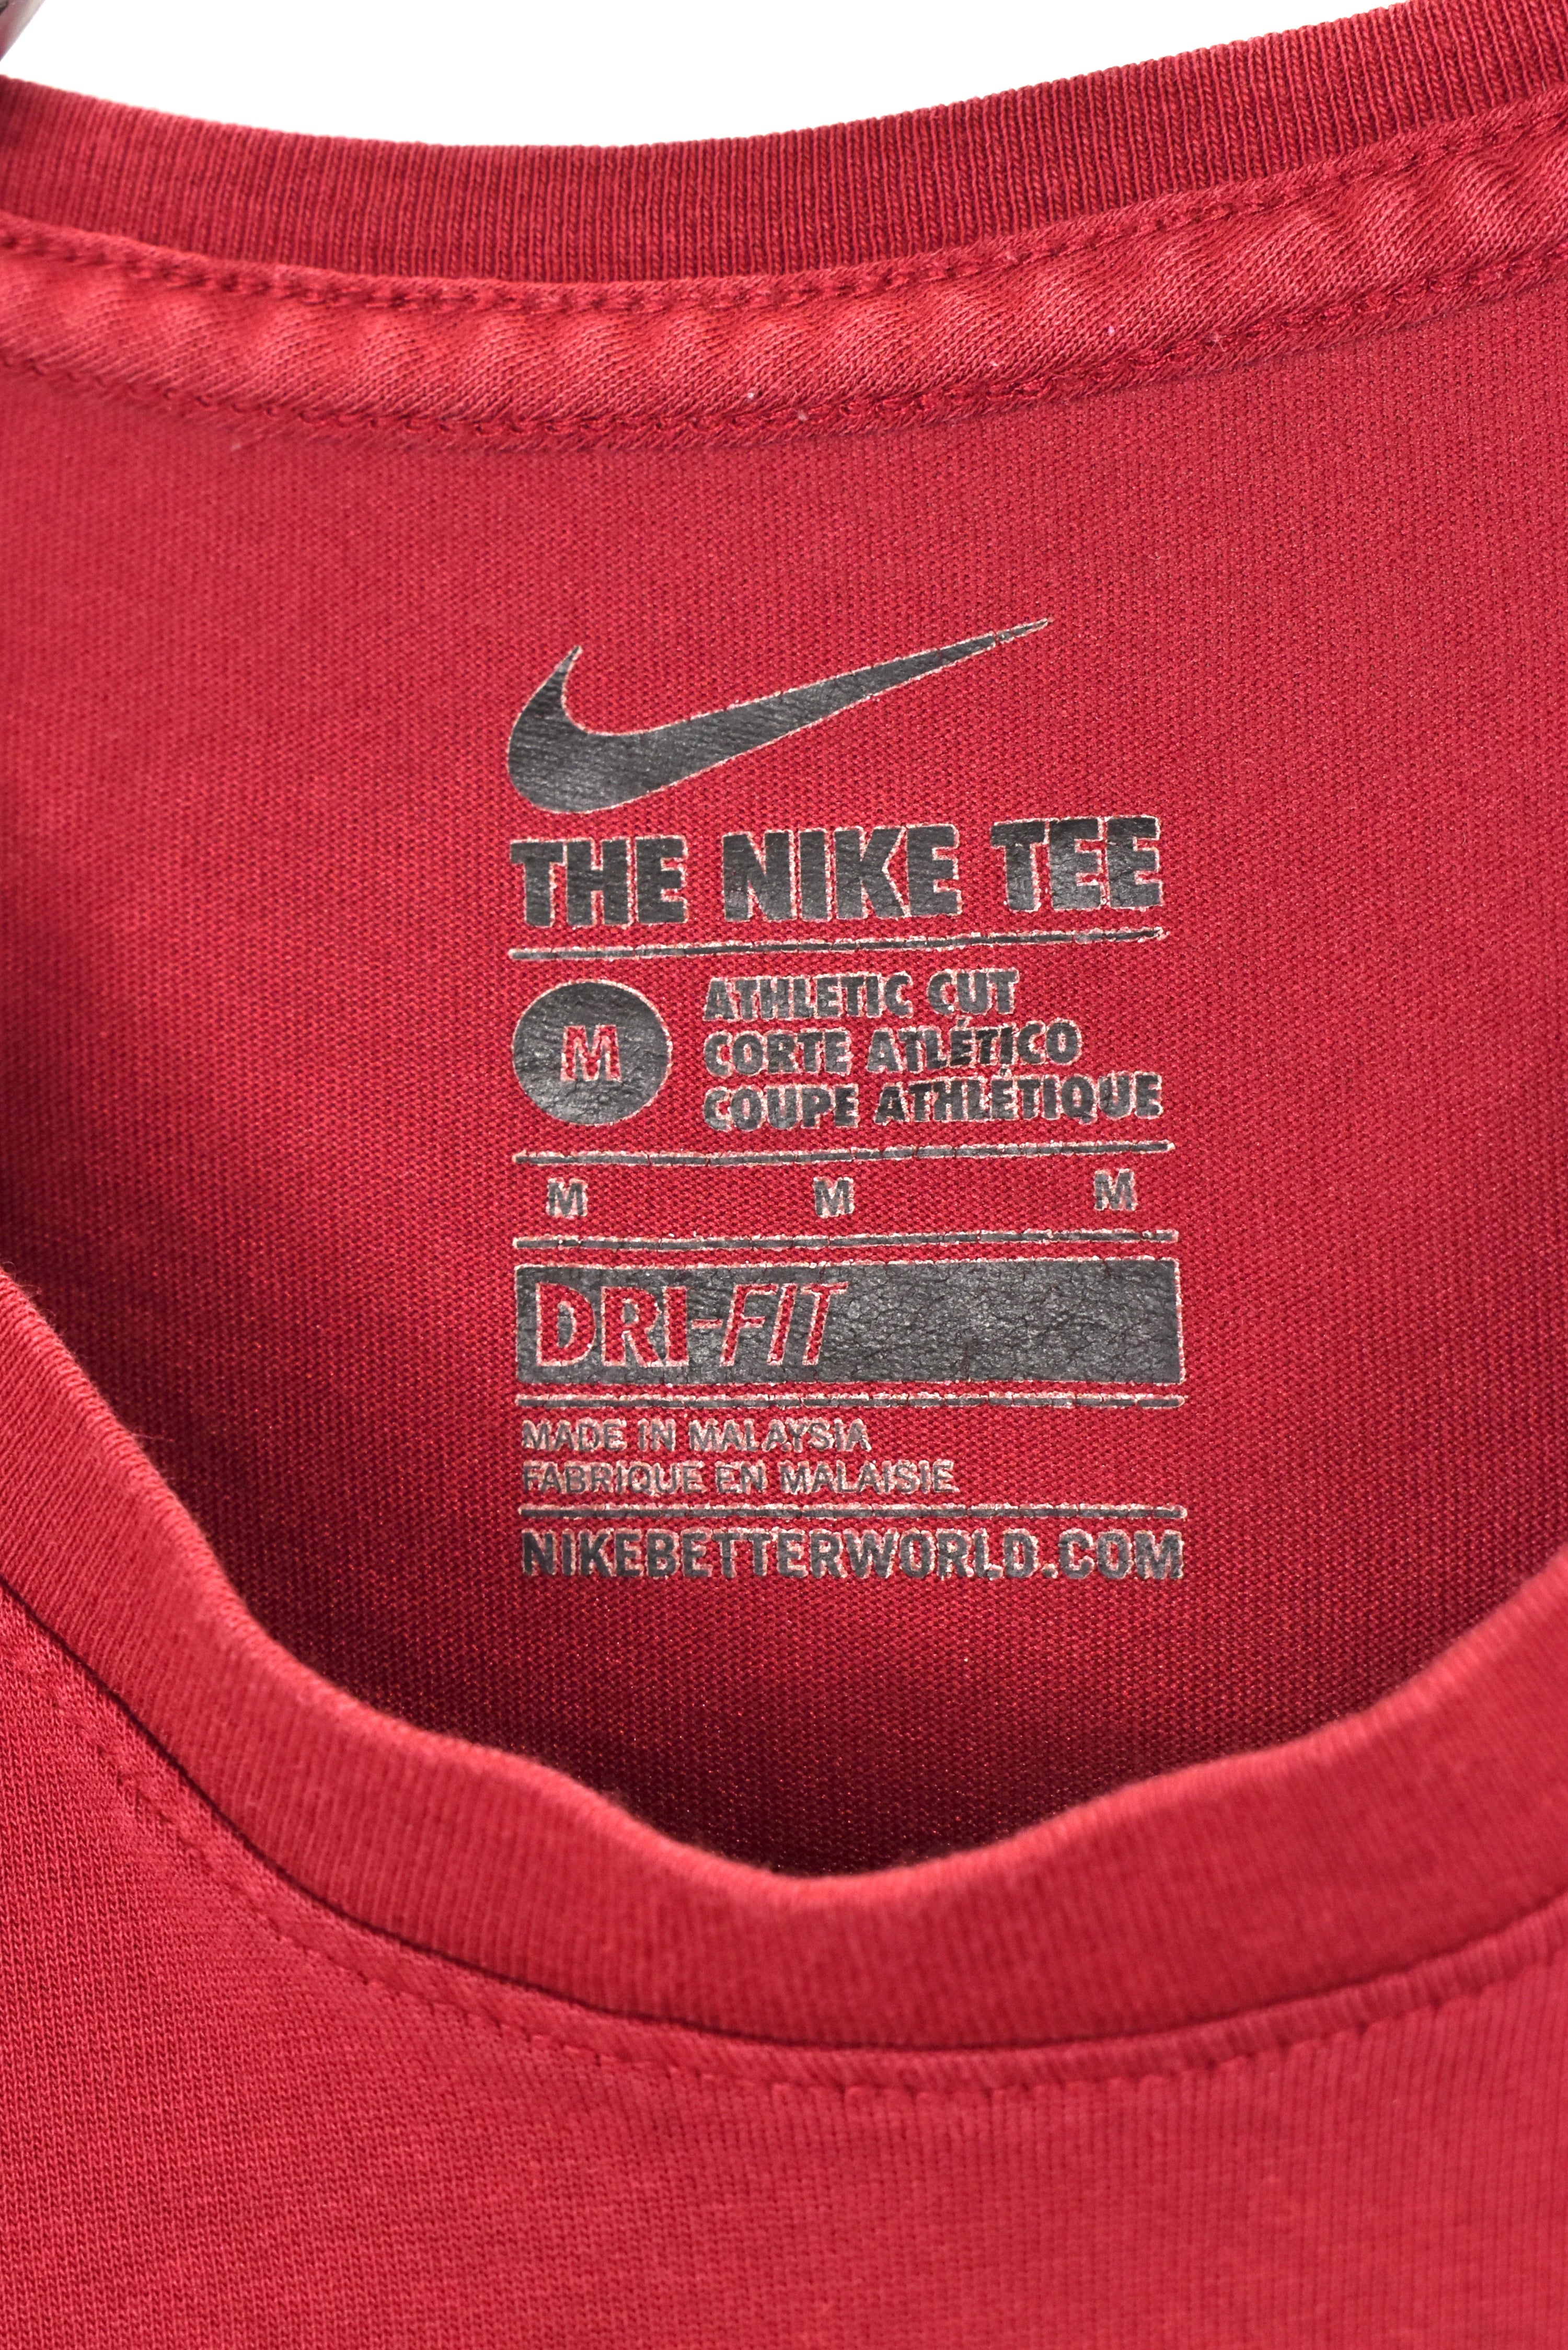 Modern Nike Dri-Fit shirt, burgundy graphic tee - AU Medium NIKE